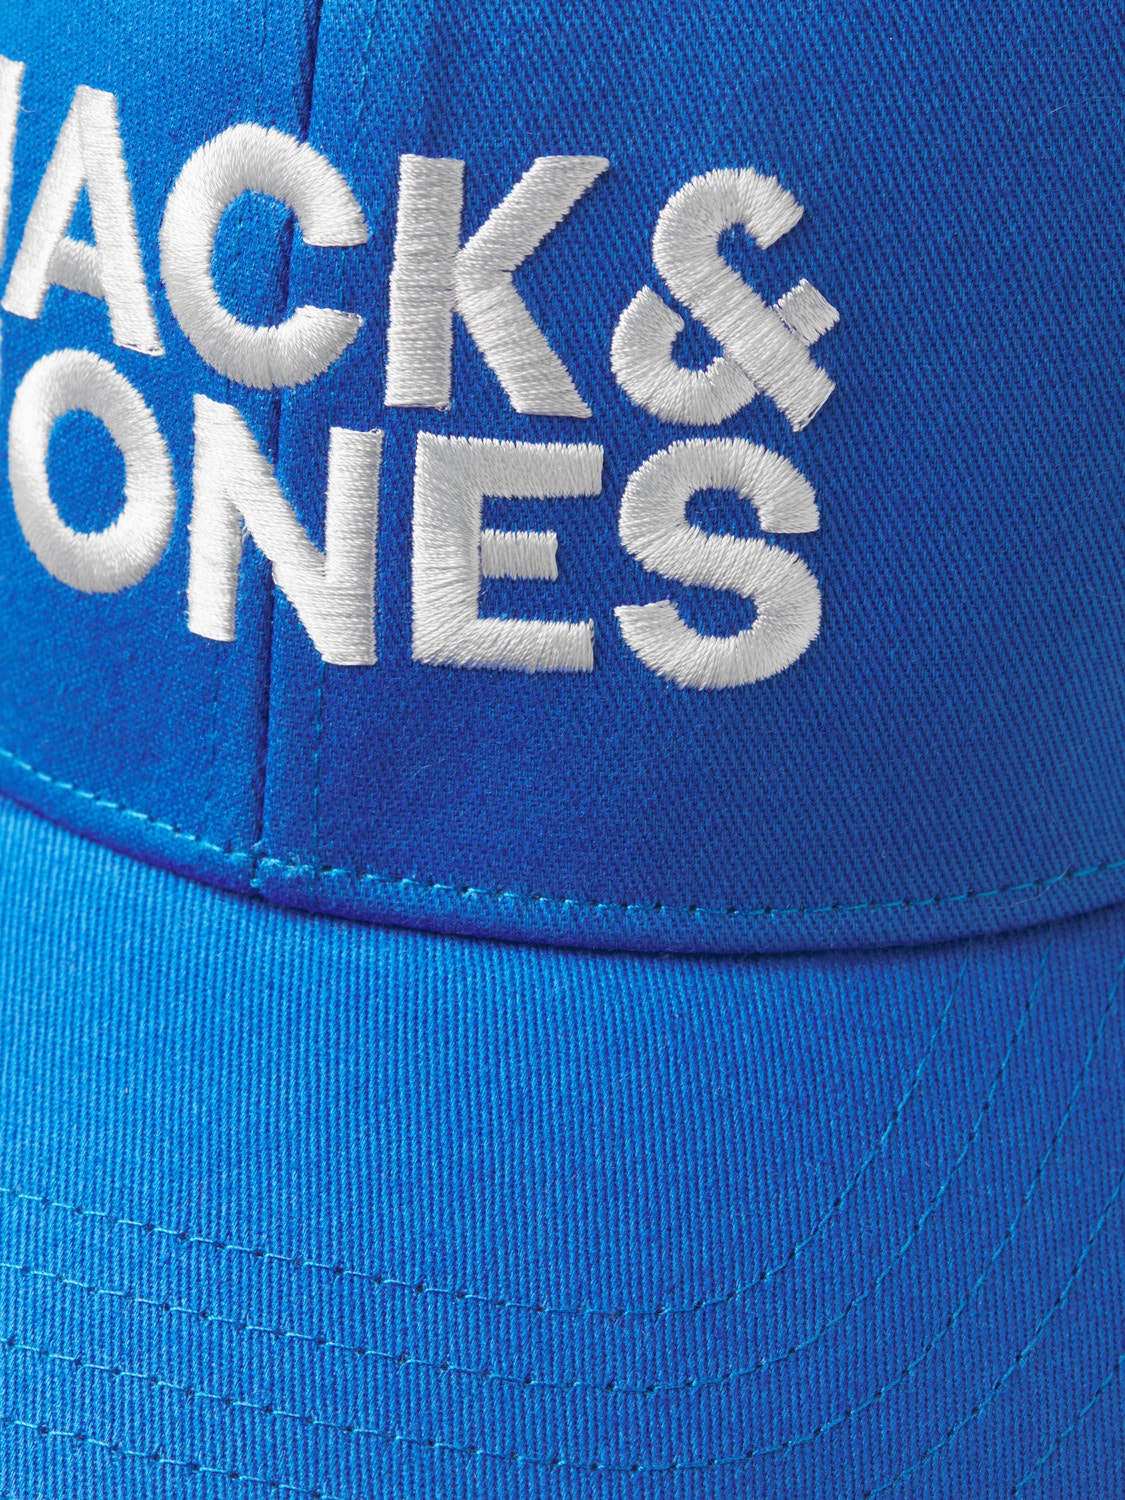 Jack & Jones Baseball-caps -Electric Blue Lemonade - 12254296